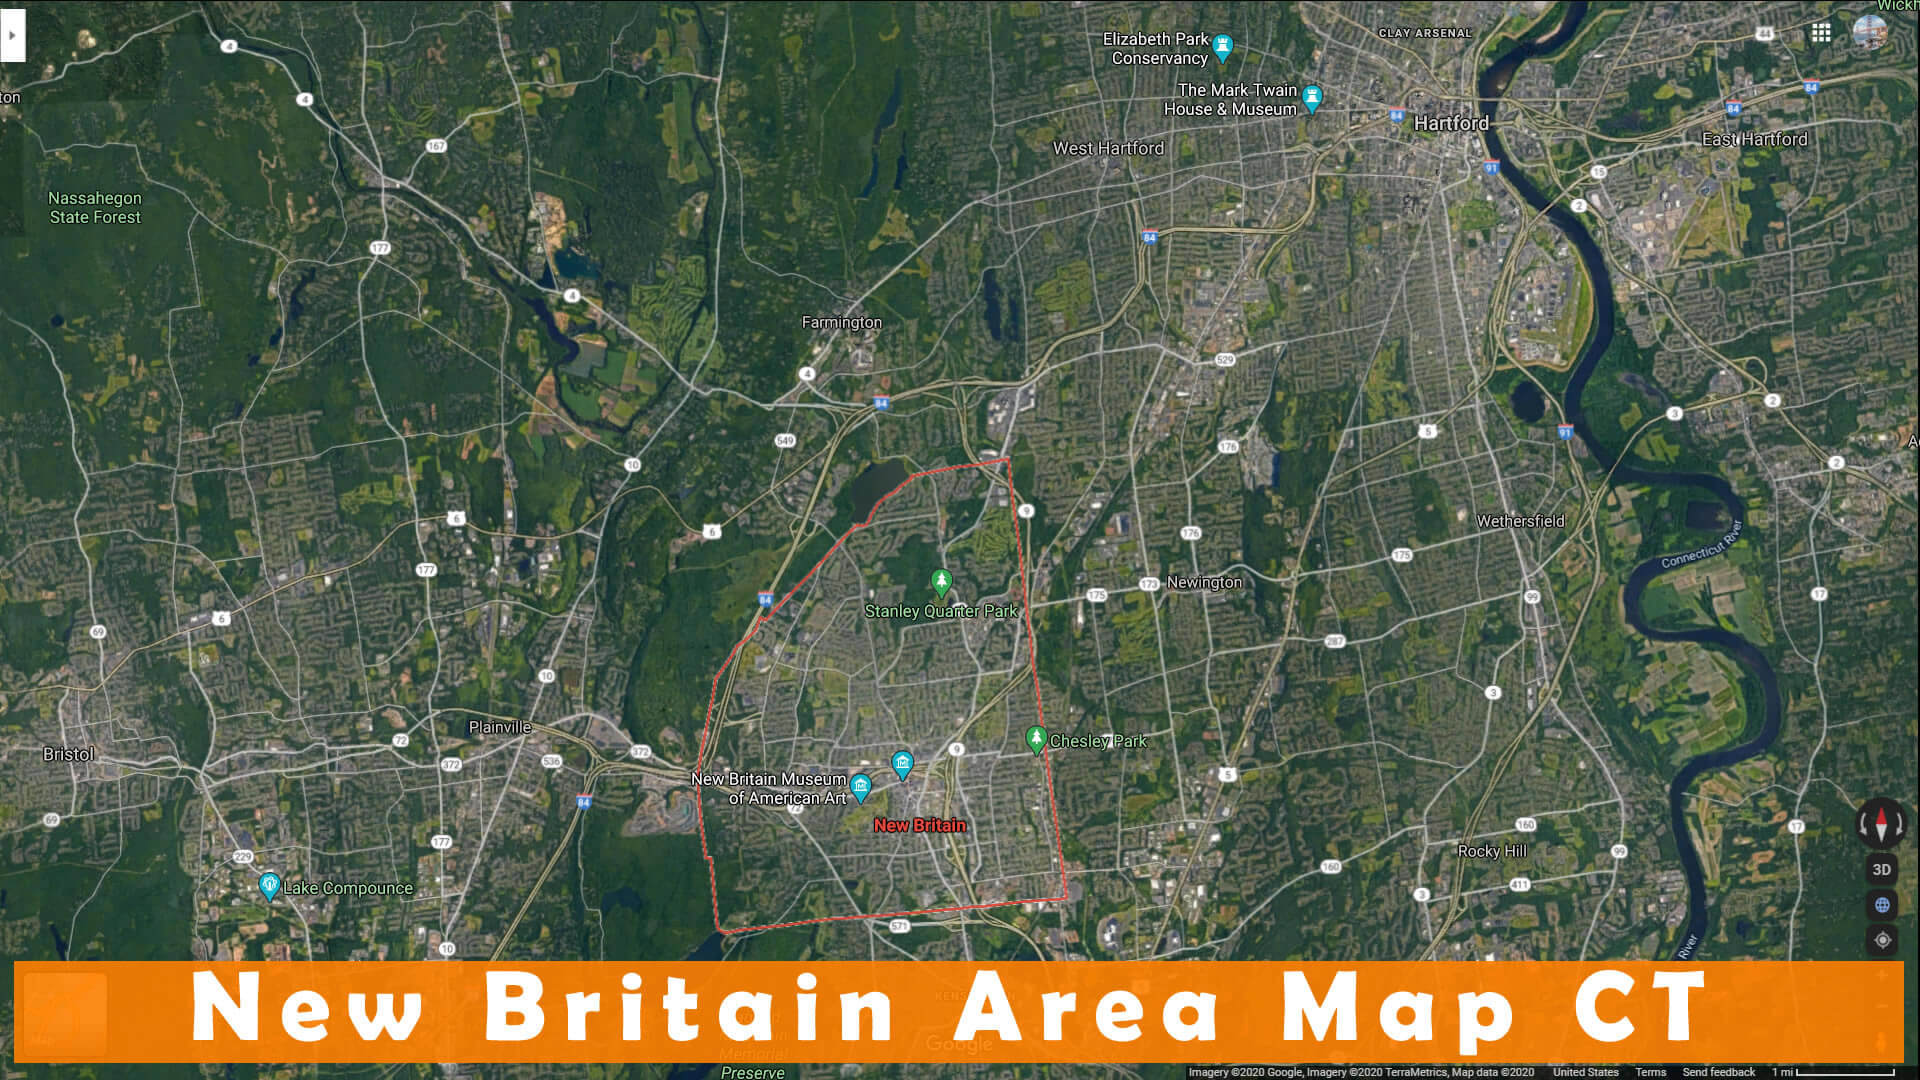 New Britain Area Map CT